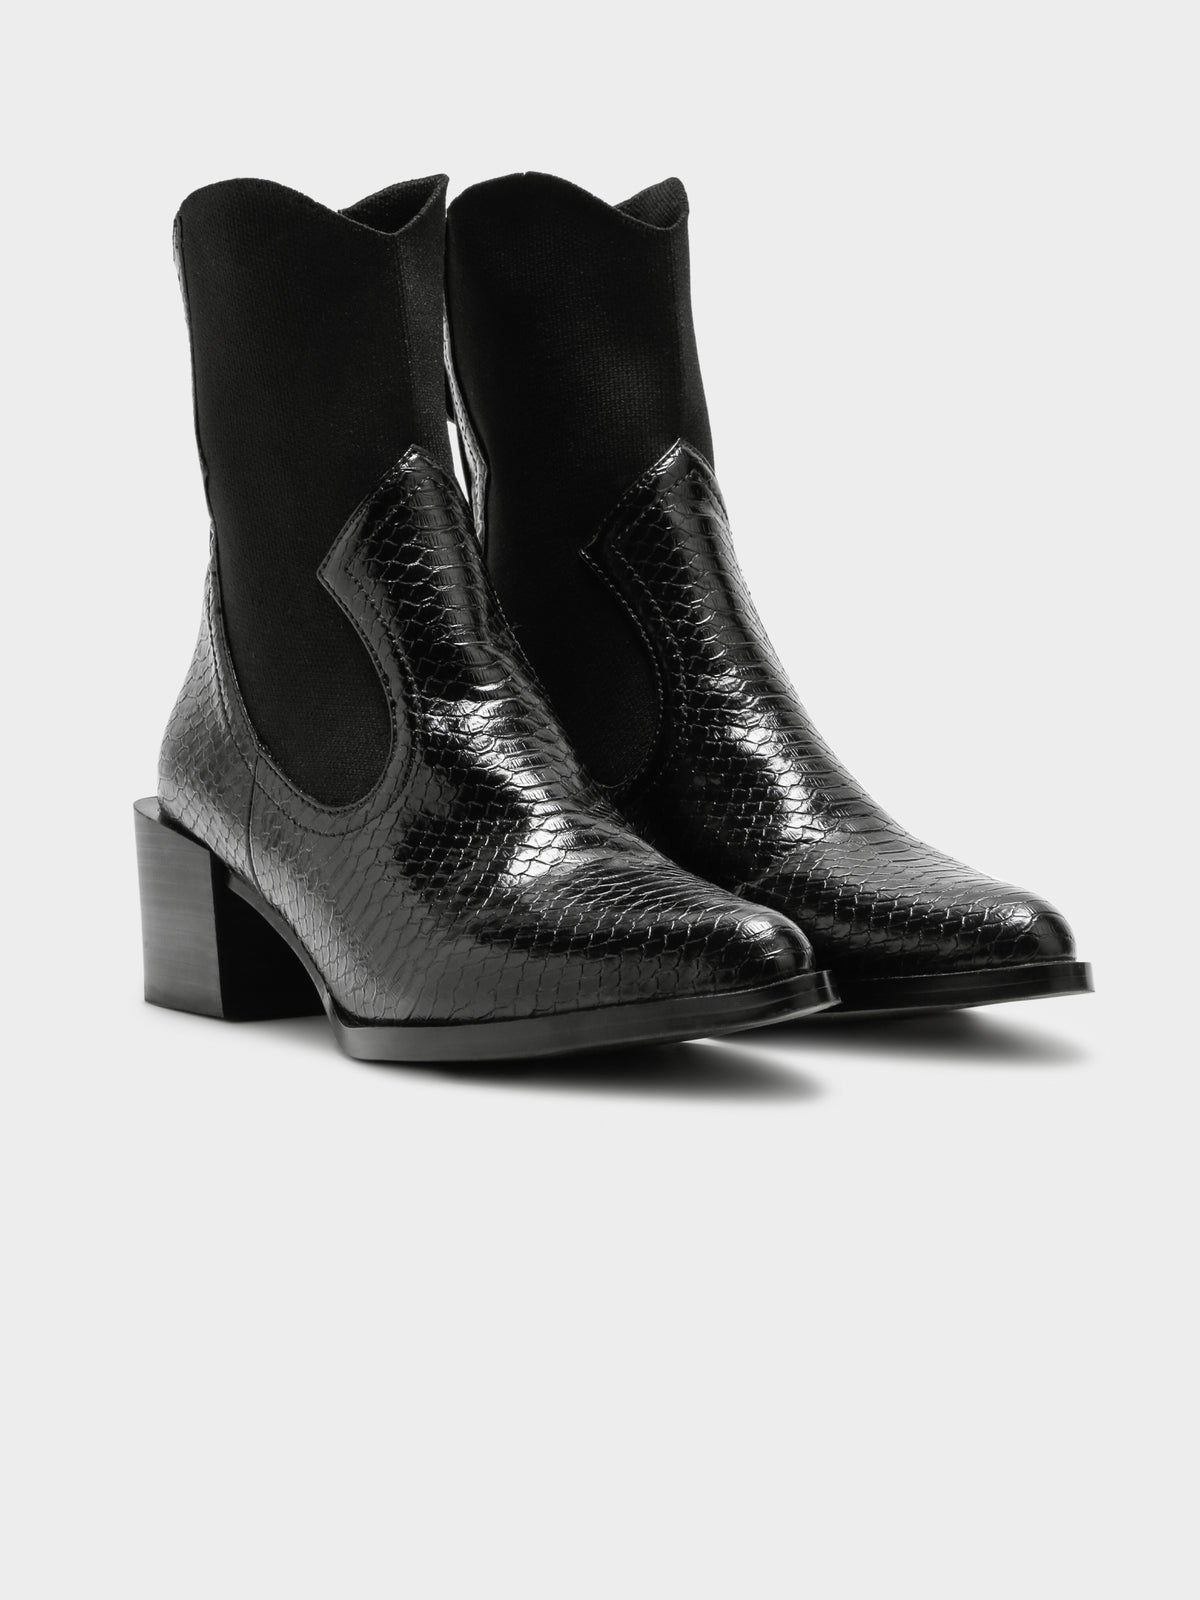 Maverick Boots in Black